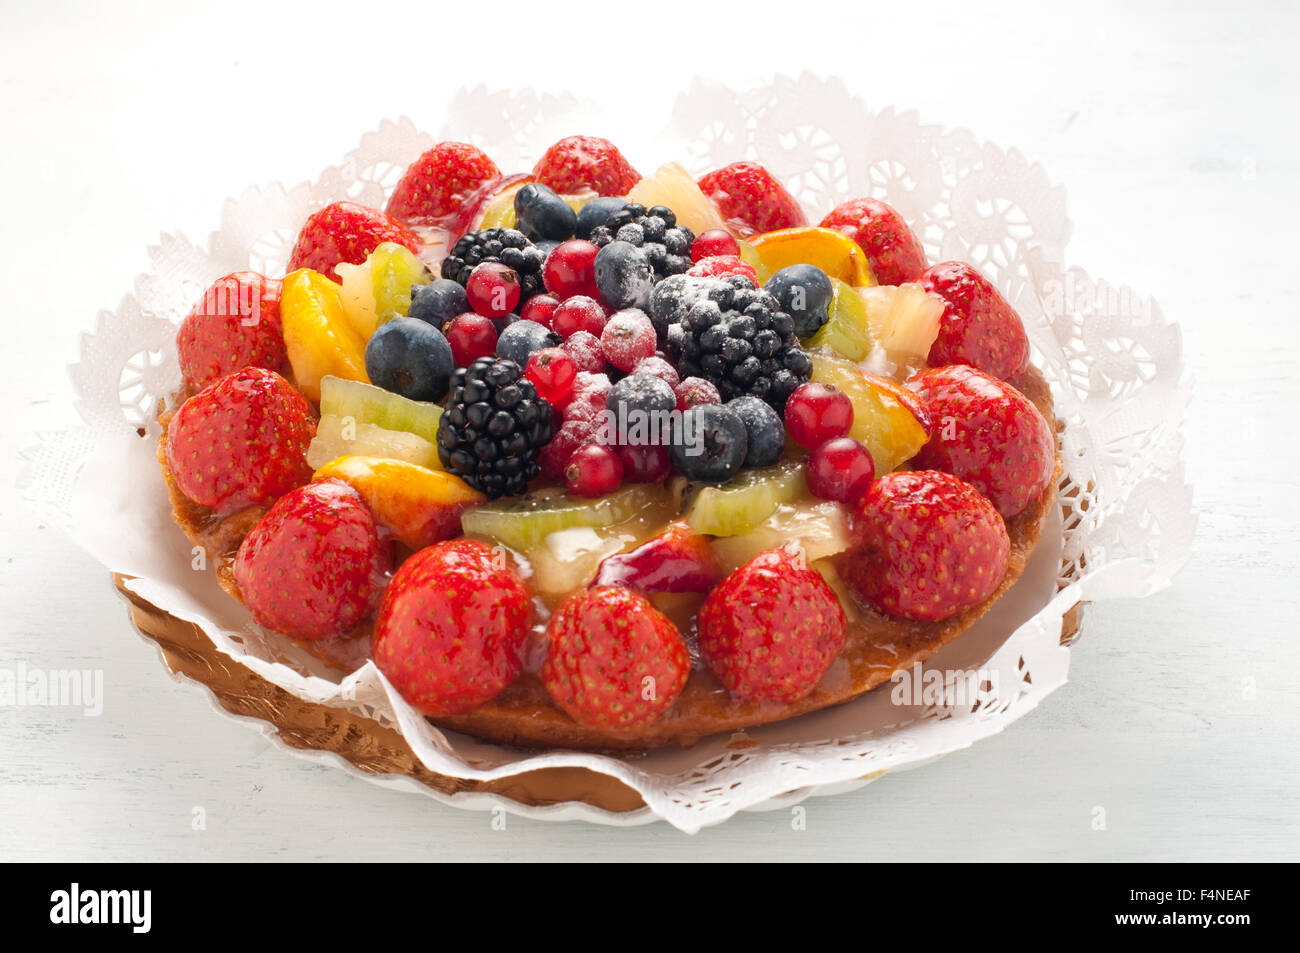 Cake with lots of fresh fruit : strawberries , kiwi , melon , berries Stock Photo